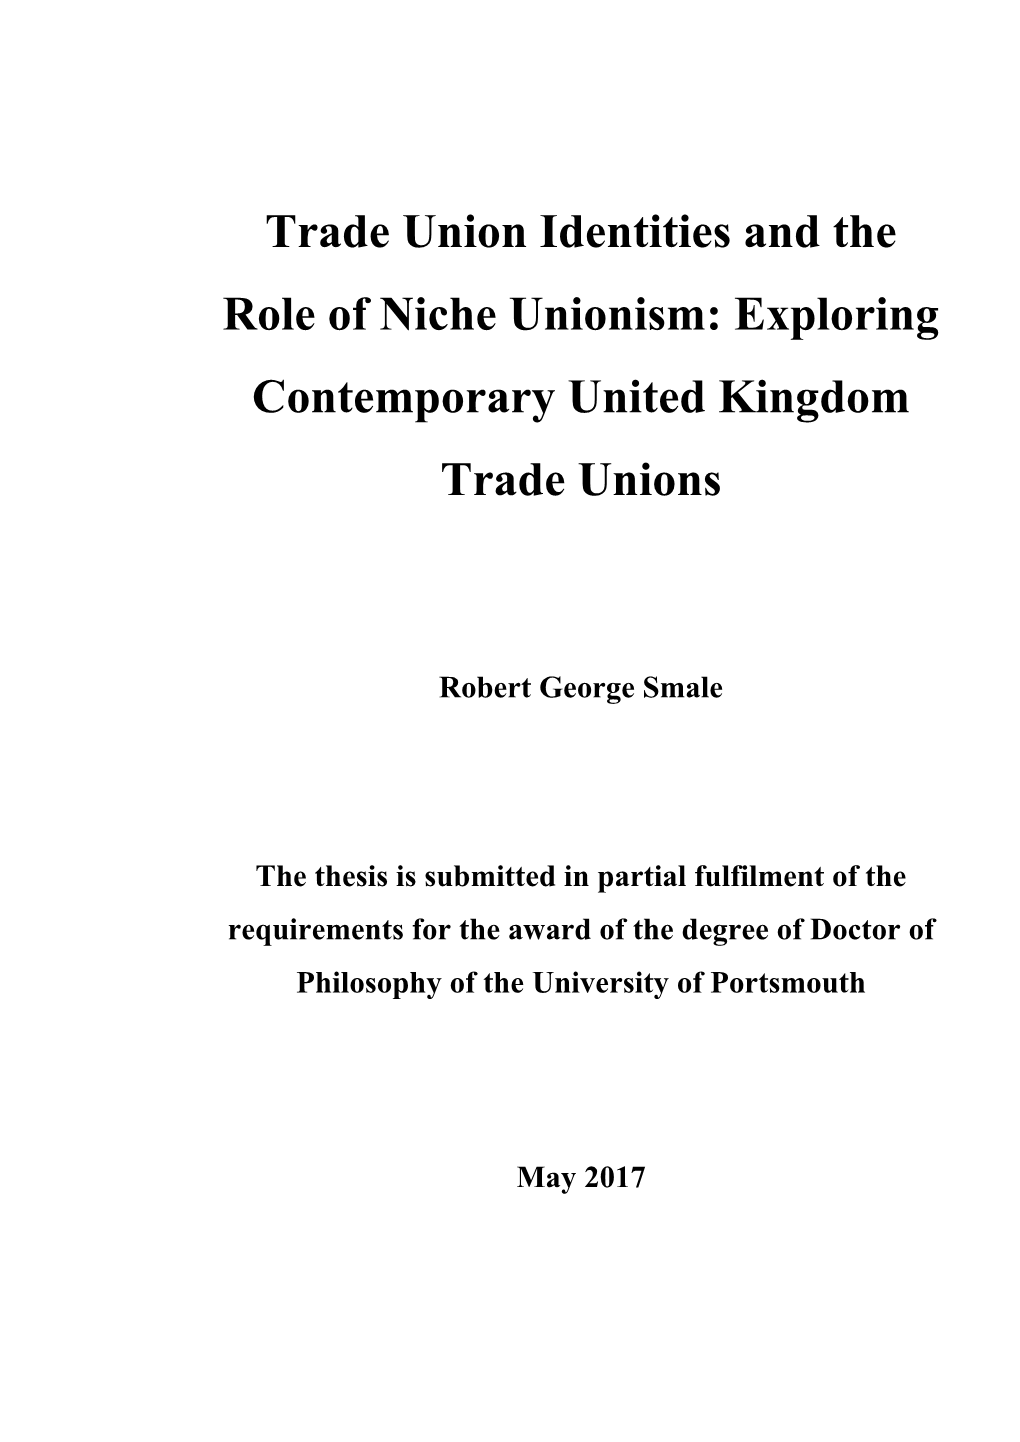 Exploring Contemporary United Kingdom Trade Unions